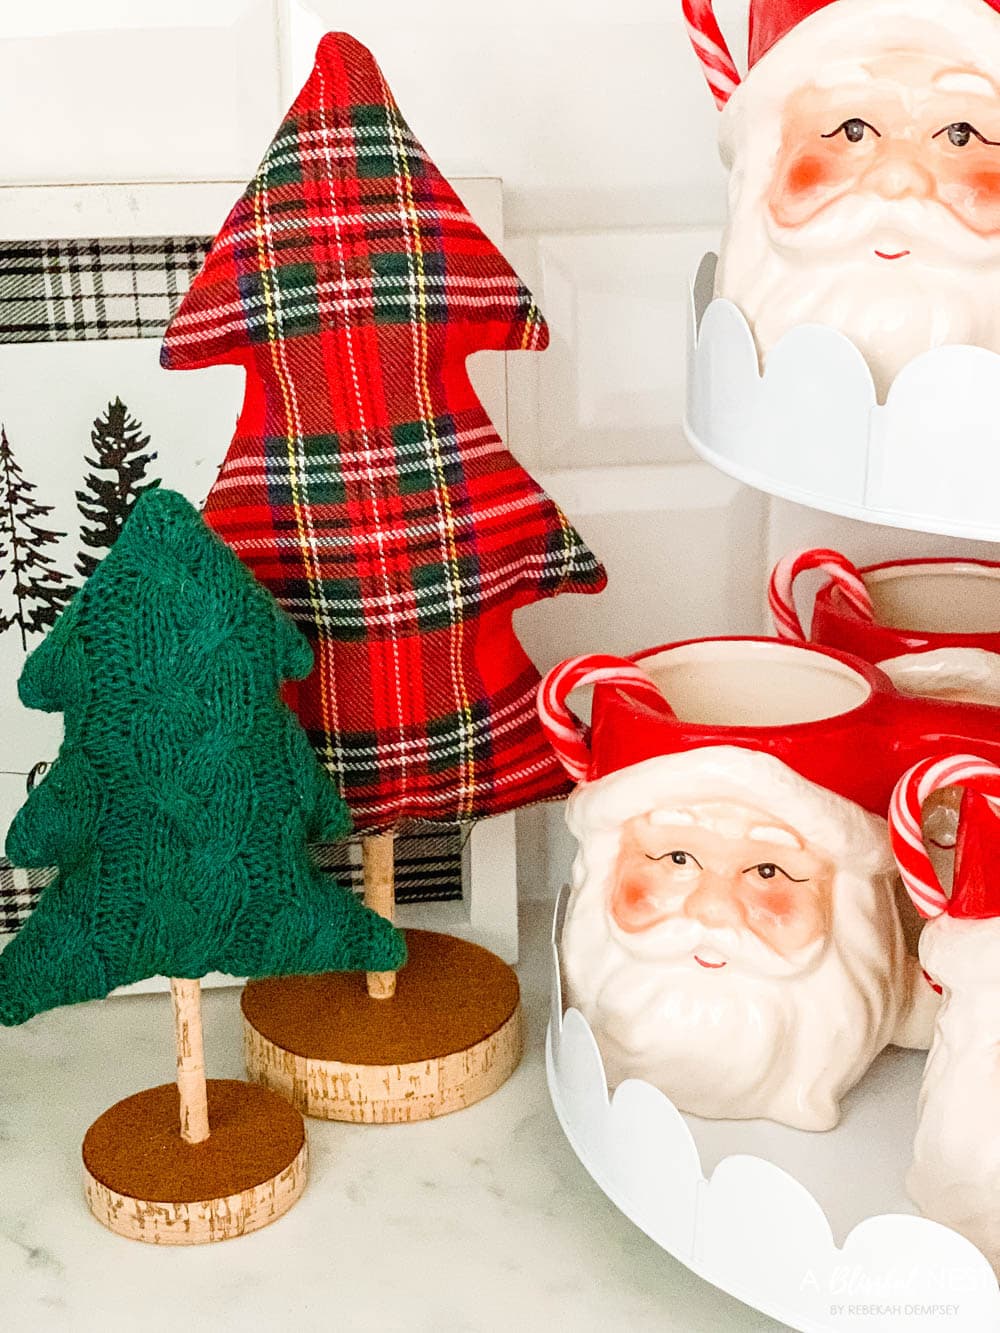 Plaid fabric Christmas tree and santa mugs on a tierd tray